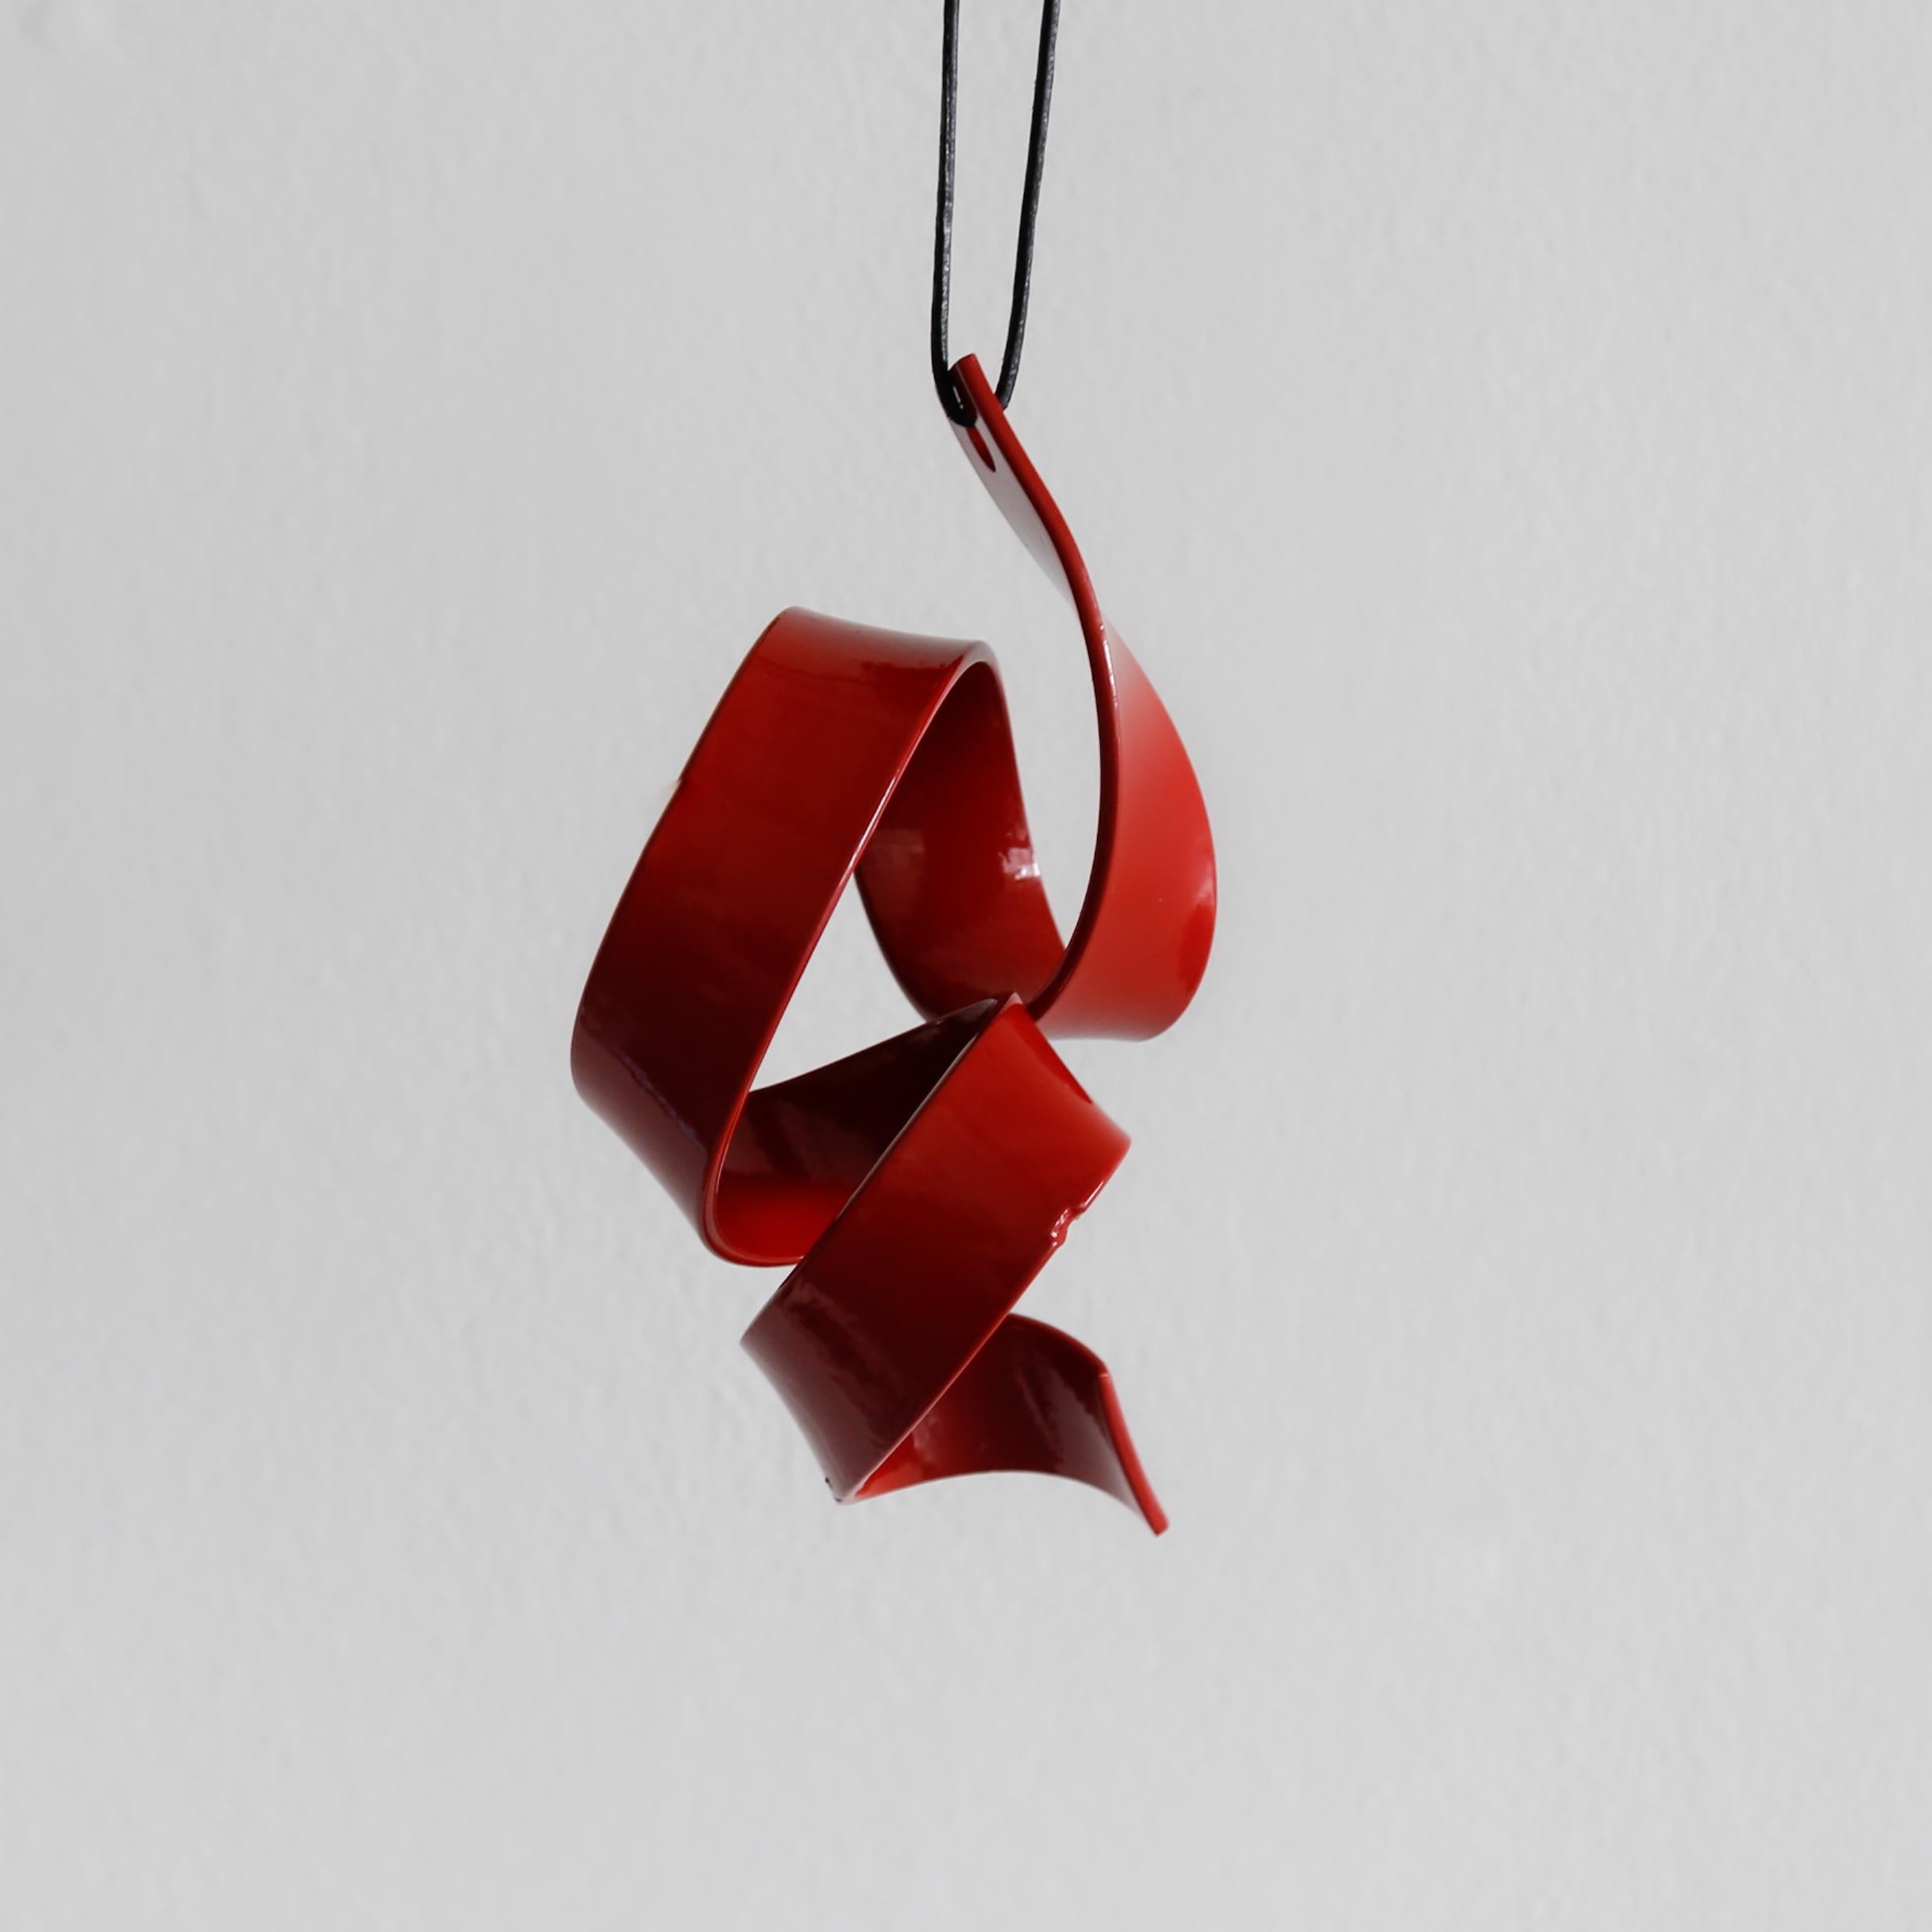 Red Ribbon 8 - Sculpture by Morgan Robinson